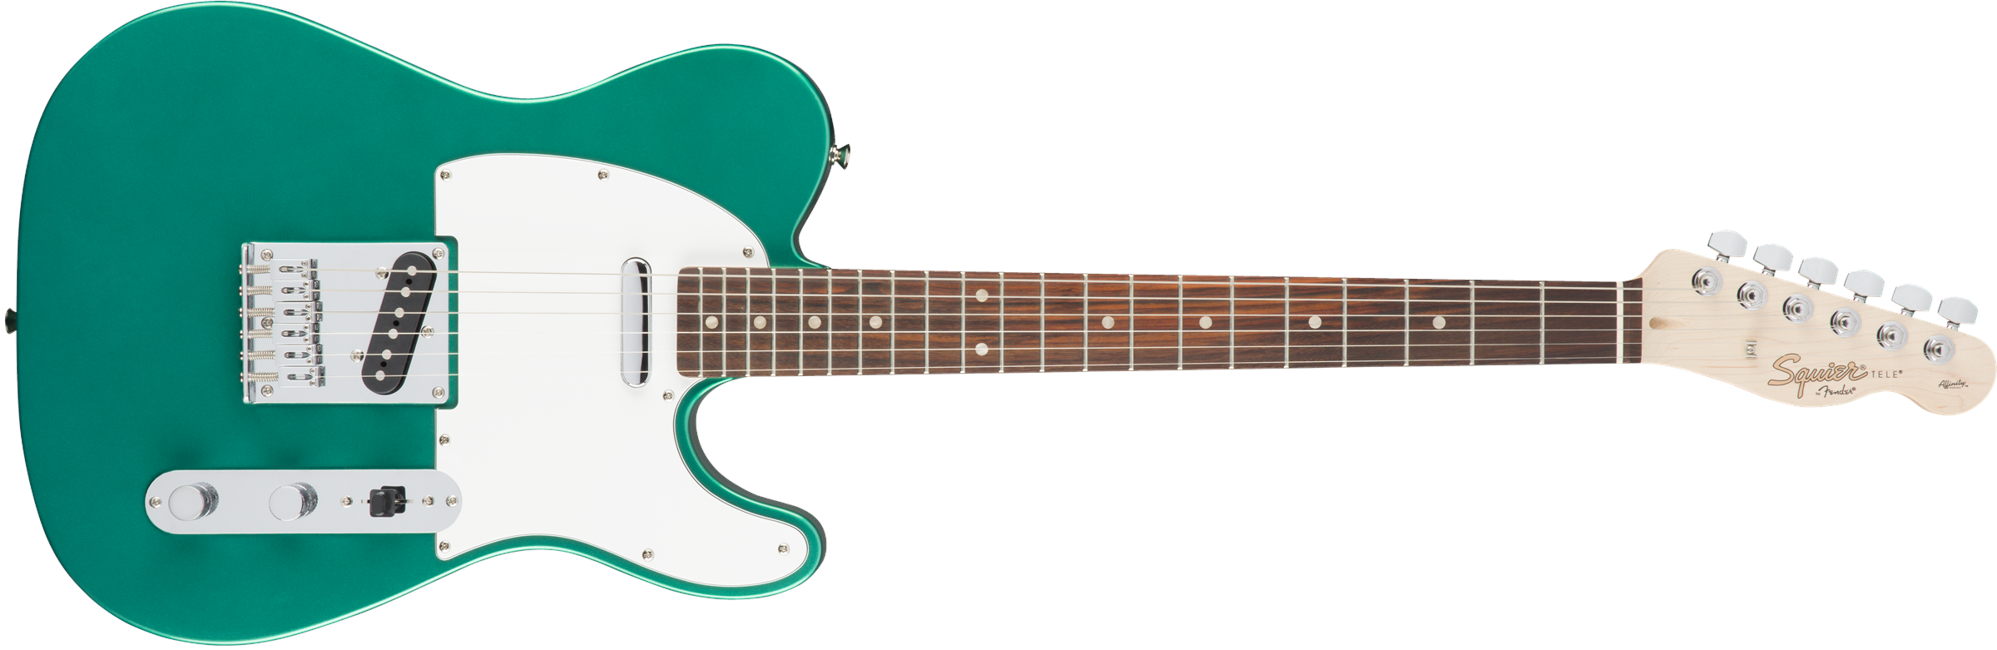 Squier By Fender - Affinity Telecaster - Elektrisk Guitar (Race Green)